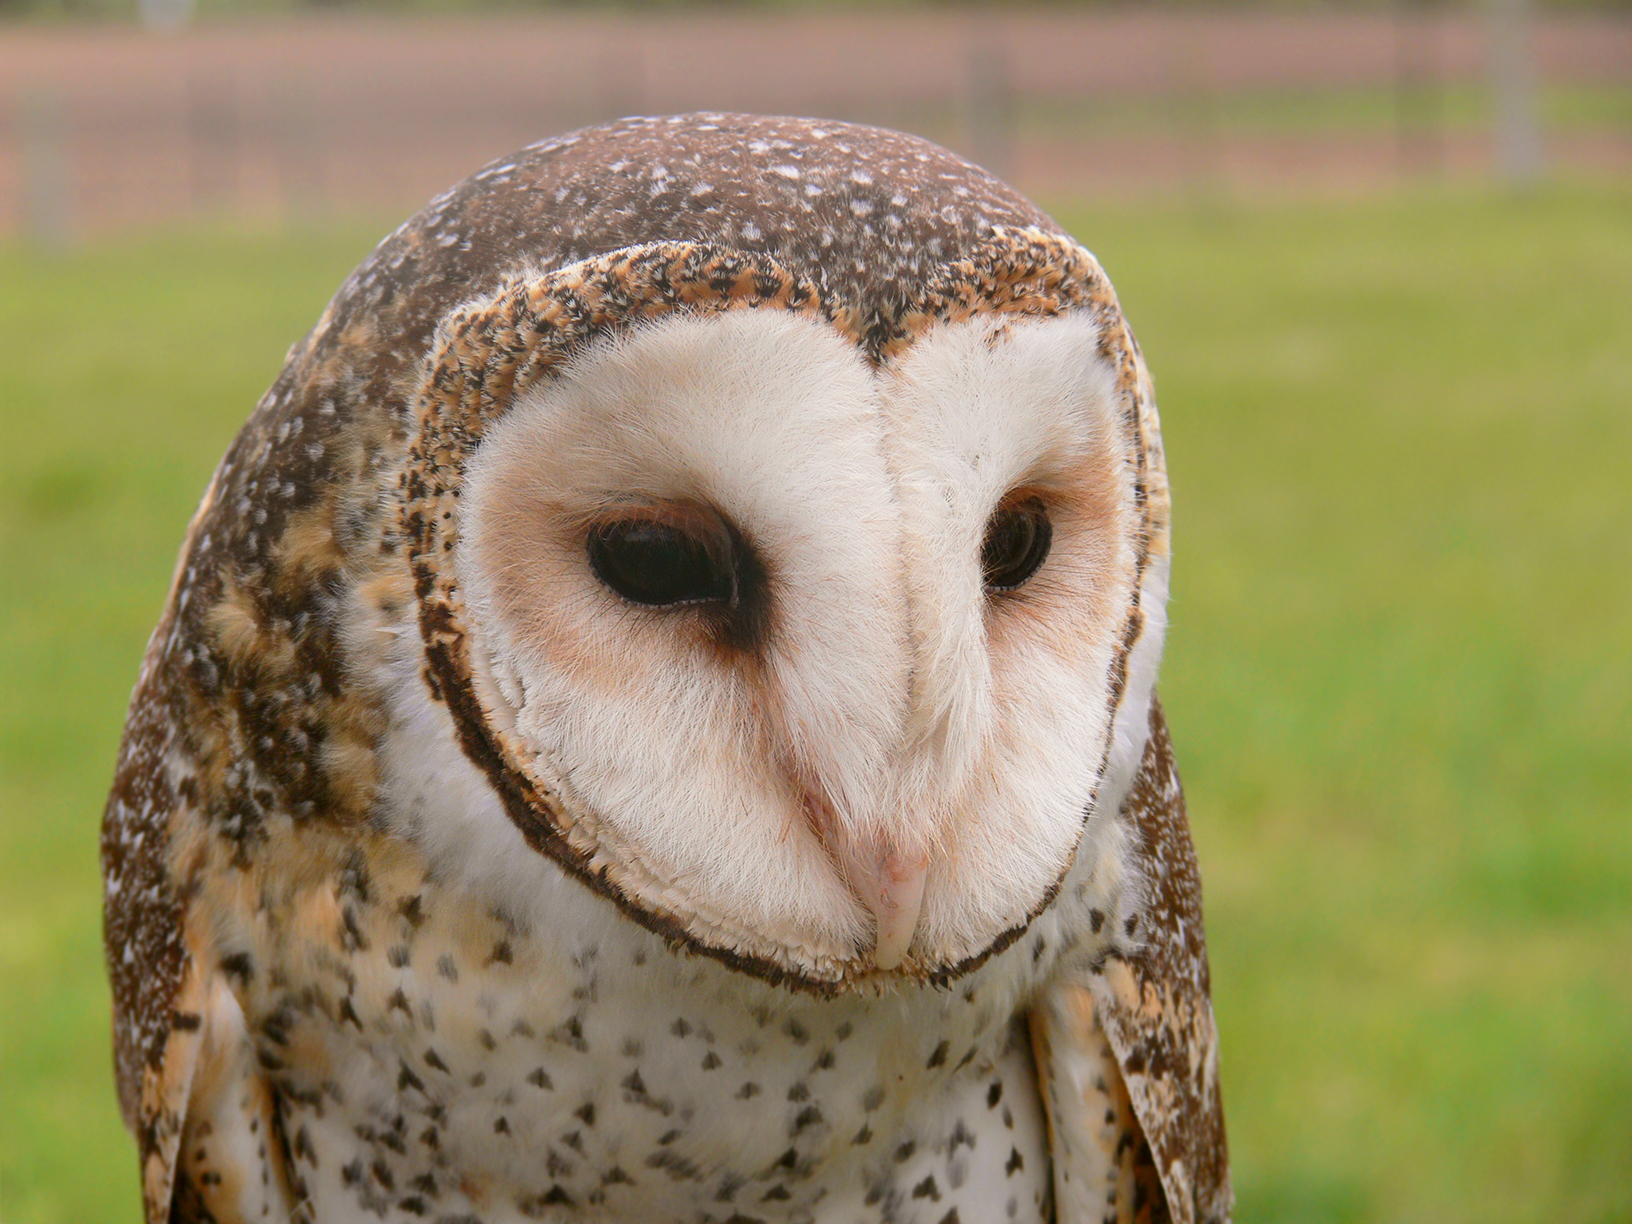 File:Masked owl head 002.jpg - Wikimedia Commons